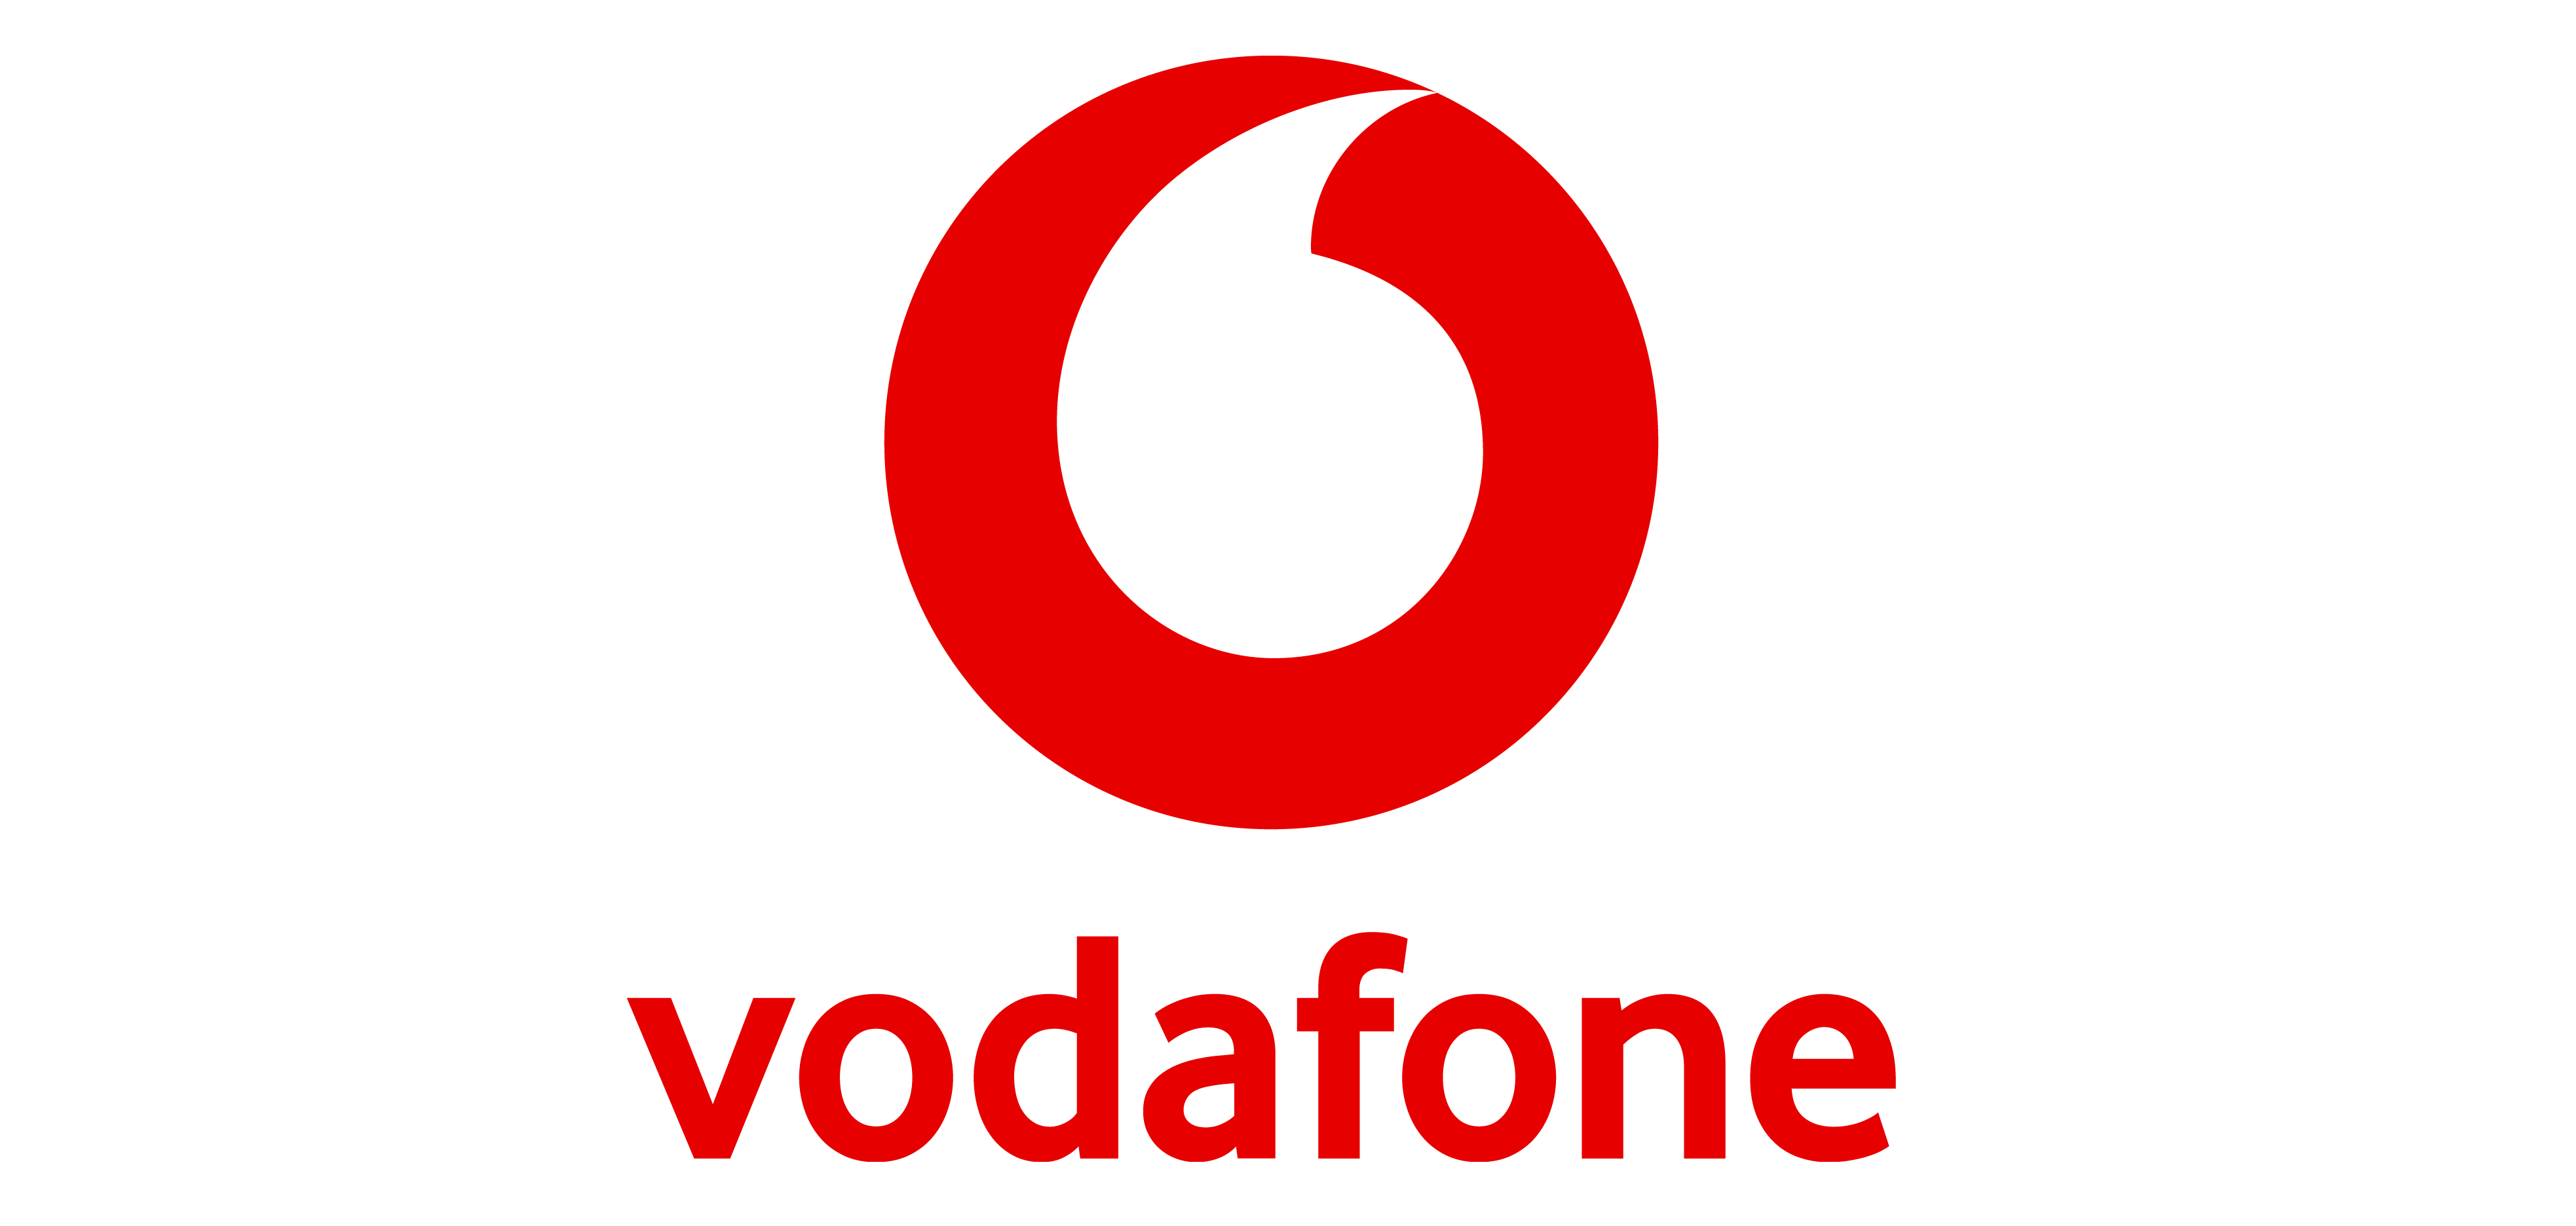 Reference teambuilding - Vodafone Czech Republic a.s., 2019